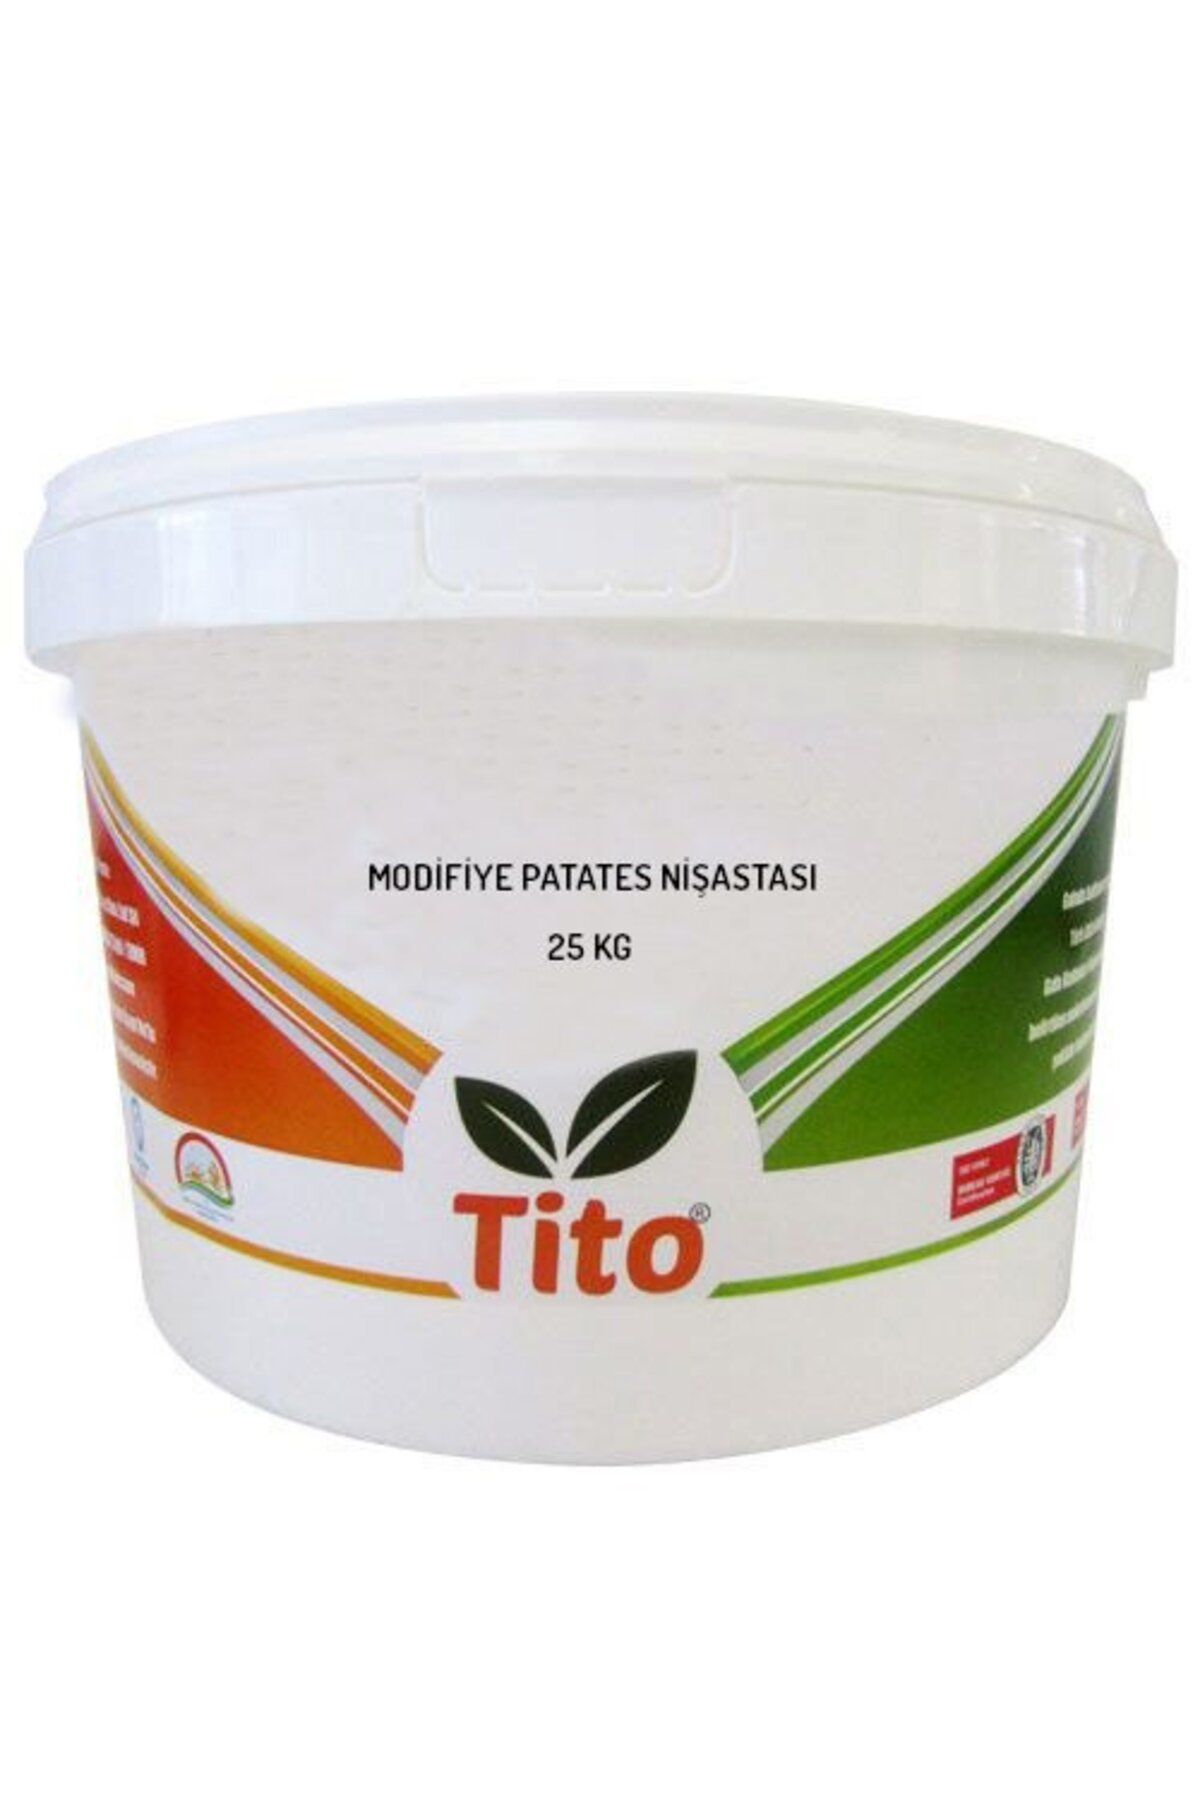 tito Modifiye Patates Nişastası Soğuk Proses E1450 25 Kg